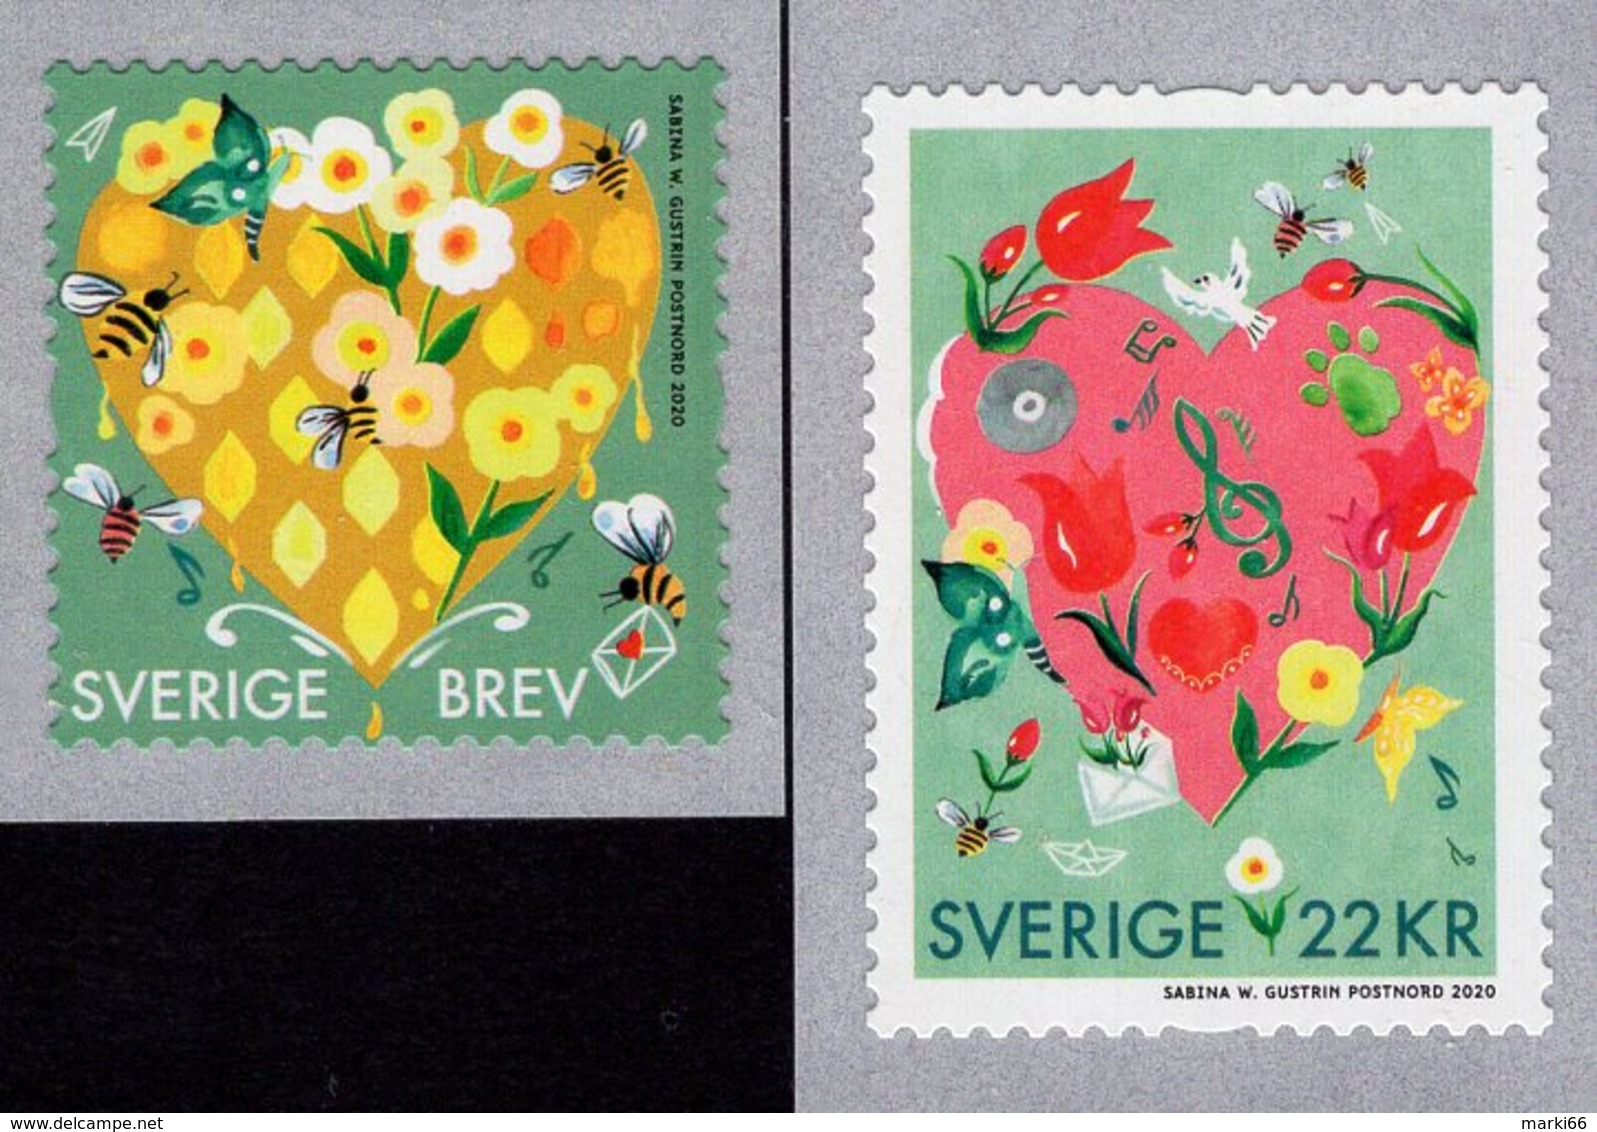 Sweden - 2020 - Heartfelt Greetings - Mint Self-adhesive Coil Stamp Set - Unused Stamps